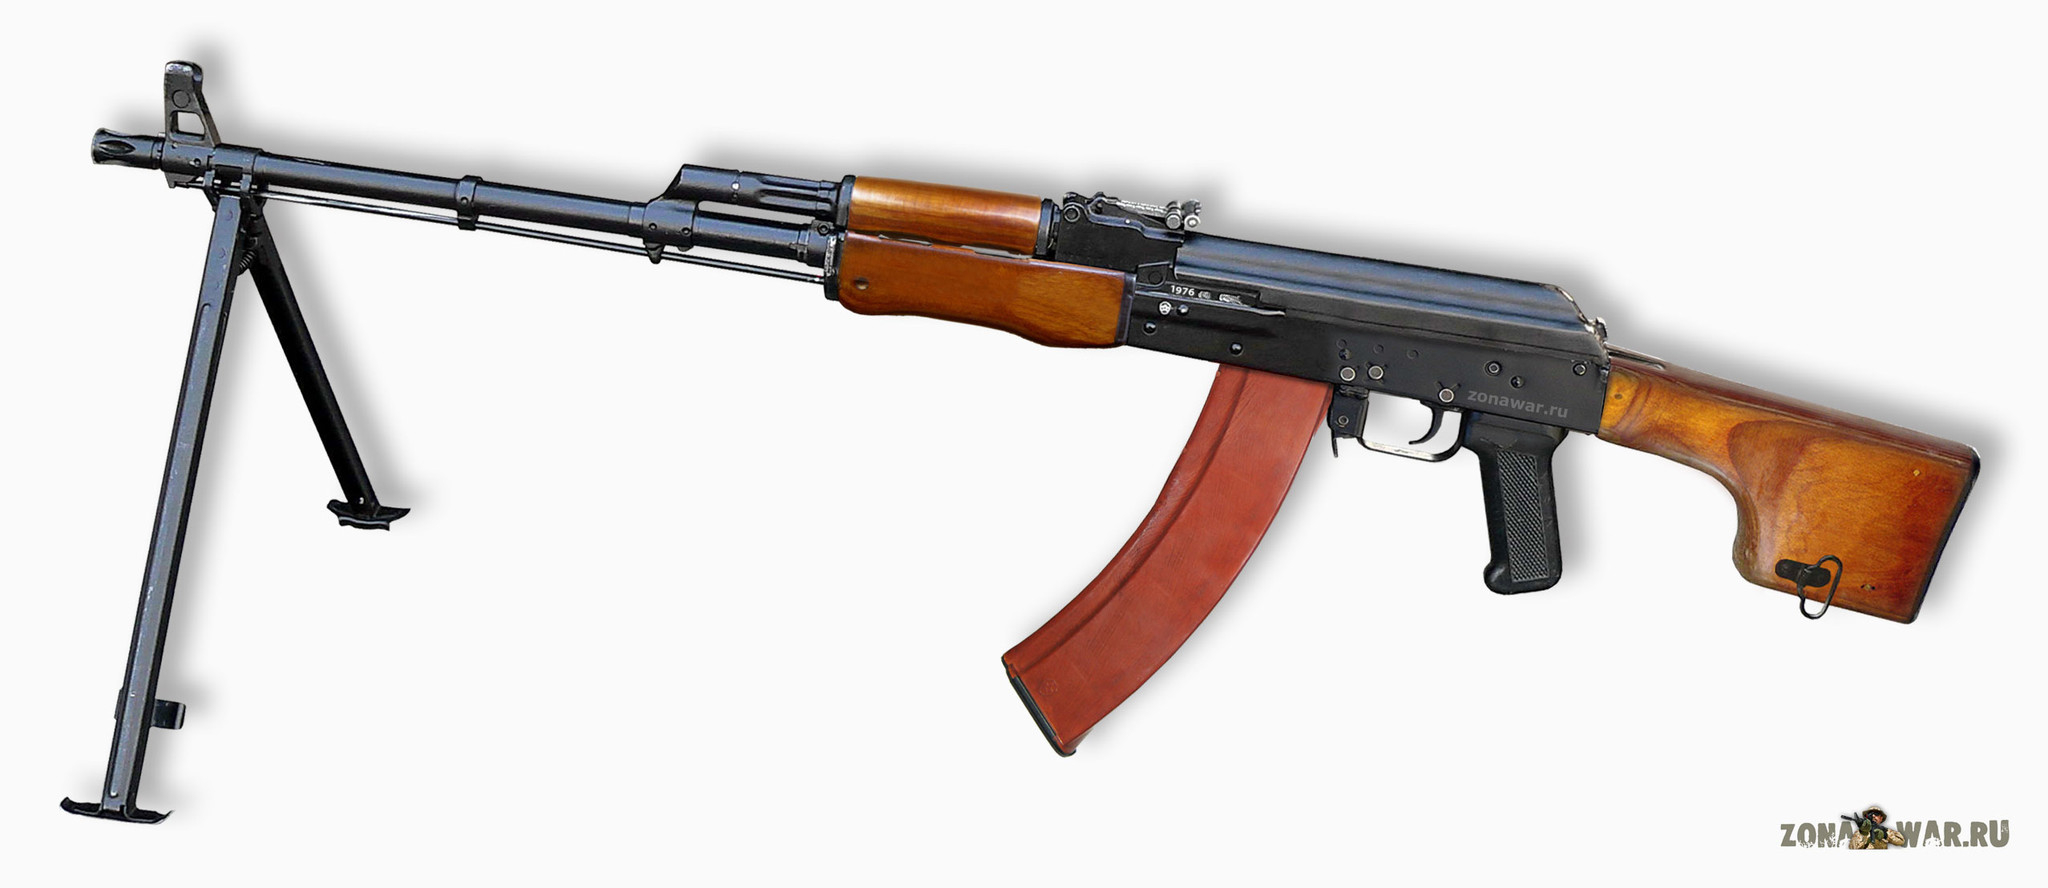 RPK-74 Kalashnikov light machine gun